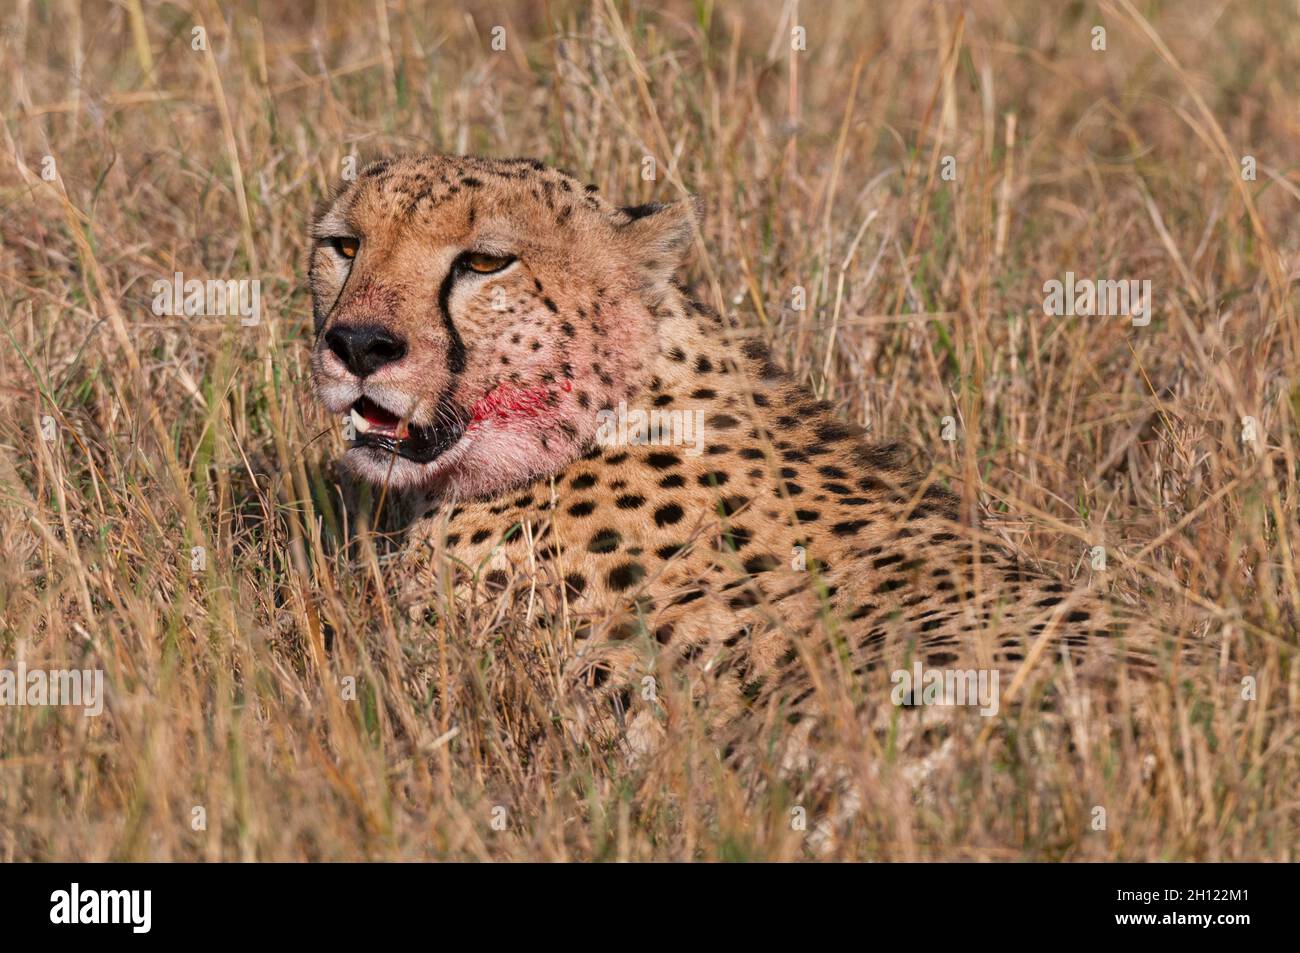 Portrait of a cheetah, Acinonyx jubatus, with blood on its face after eating. Masai Mara National Reserve, Kenya. Stock Photo